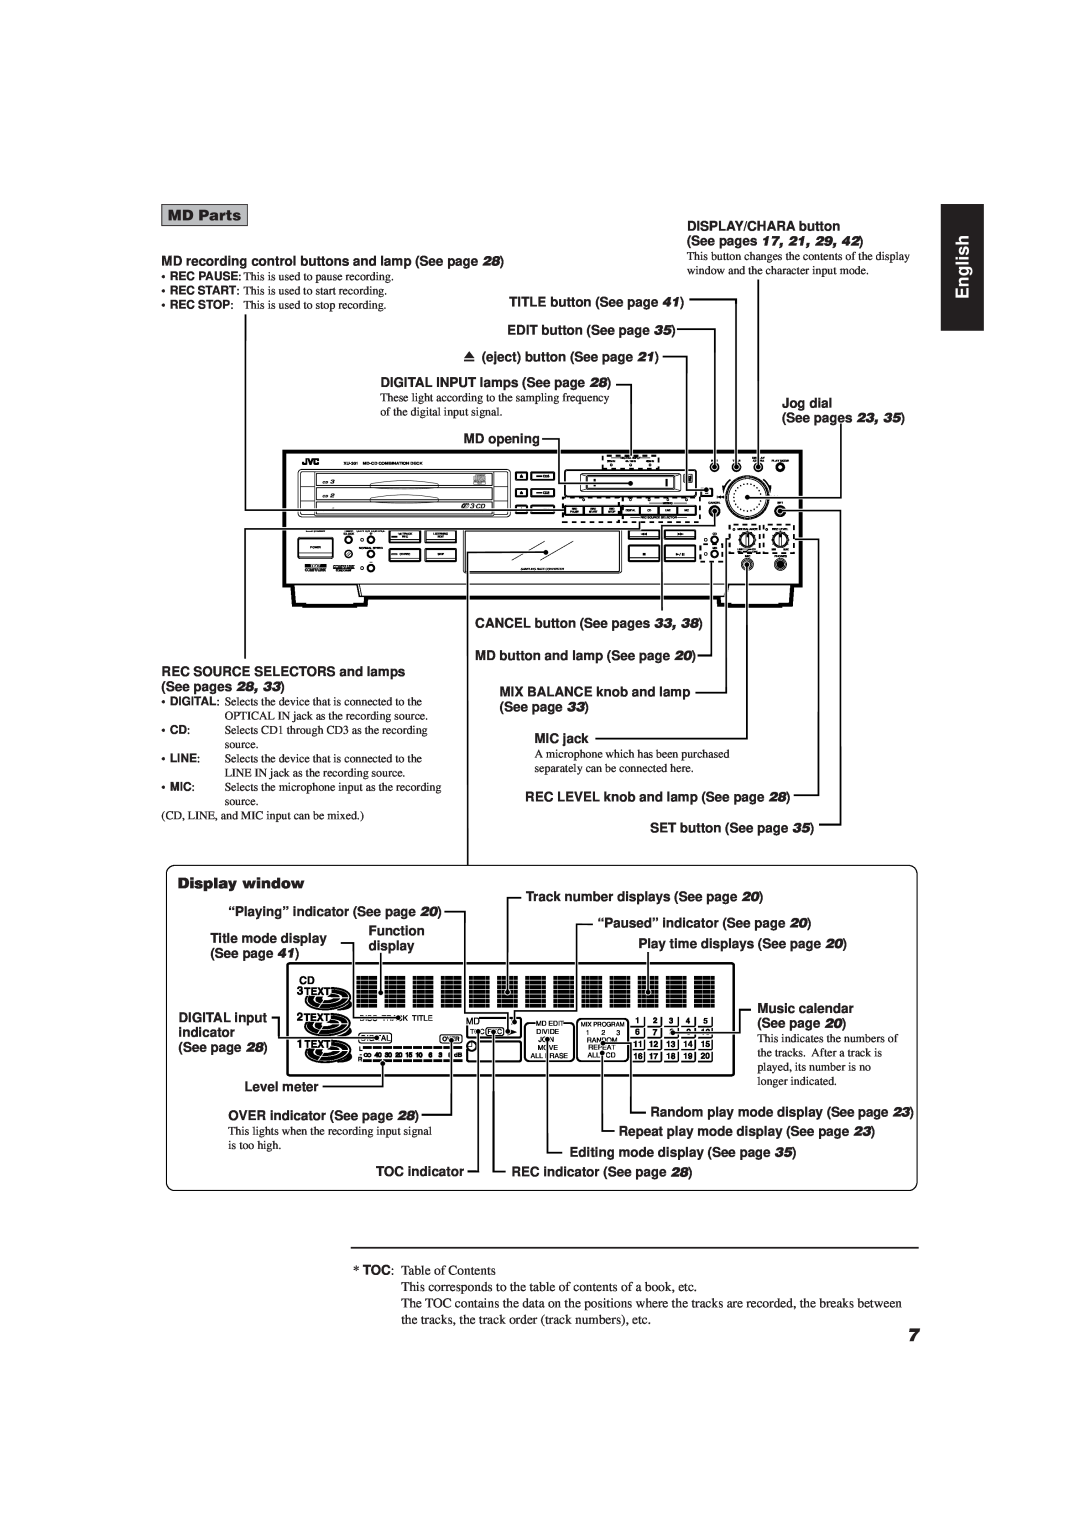 JVC XU-301BK manual English, MD Parts, Display window 